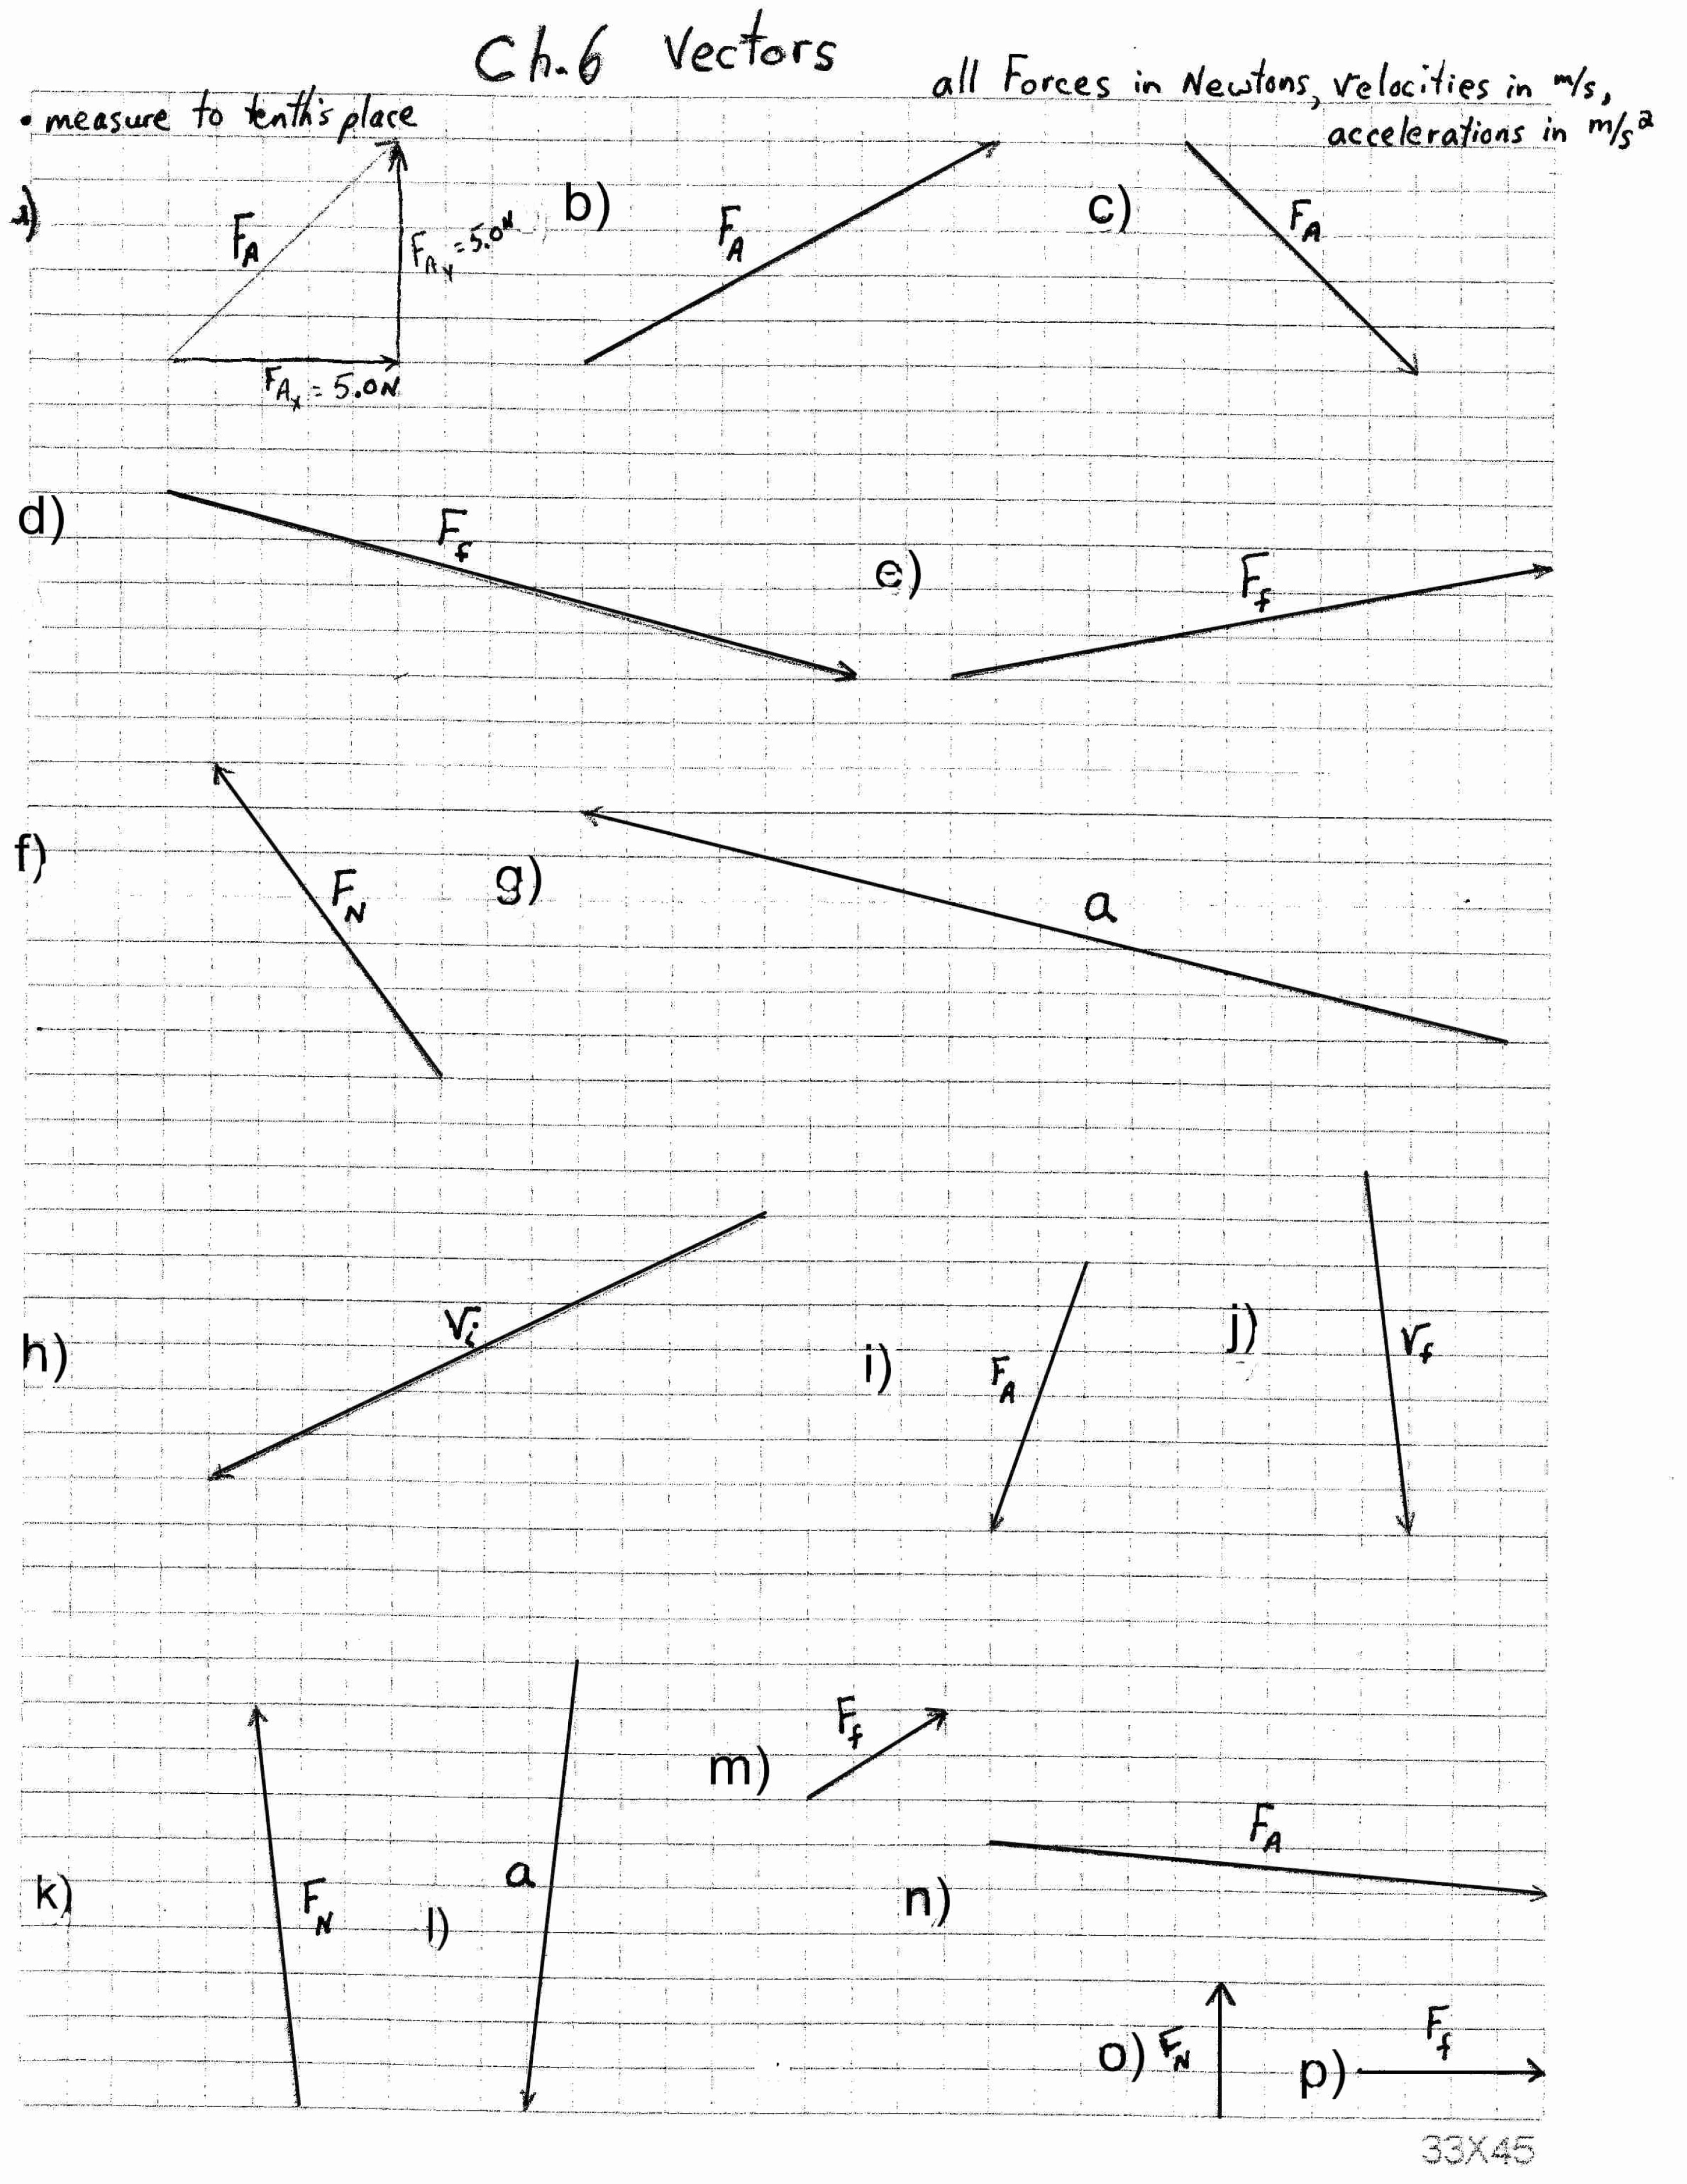 Vectors Worksheet with Answers Elegant Physics Vector Worksheet Answer Key No 2